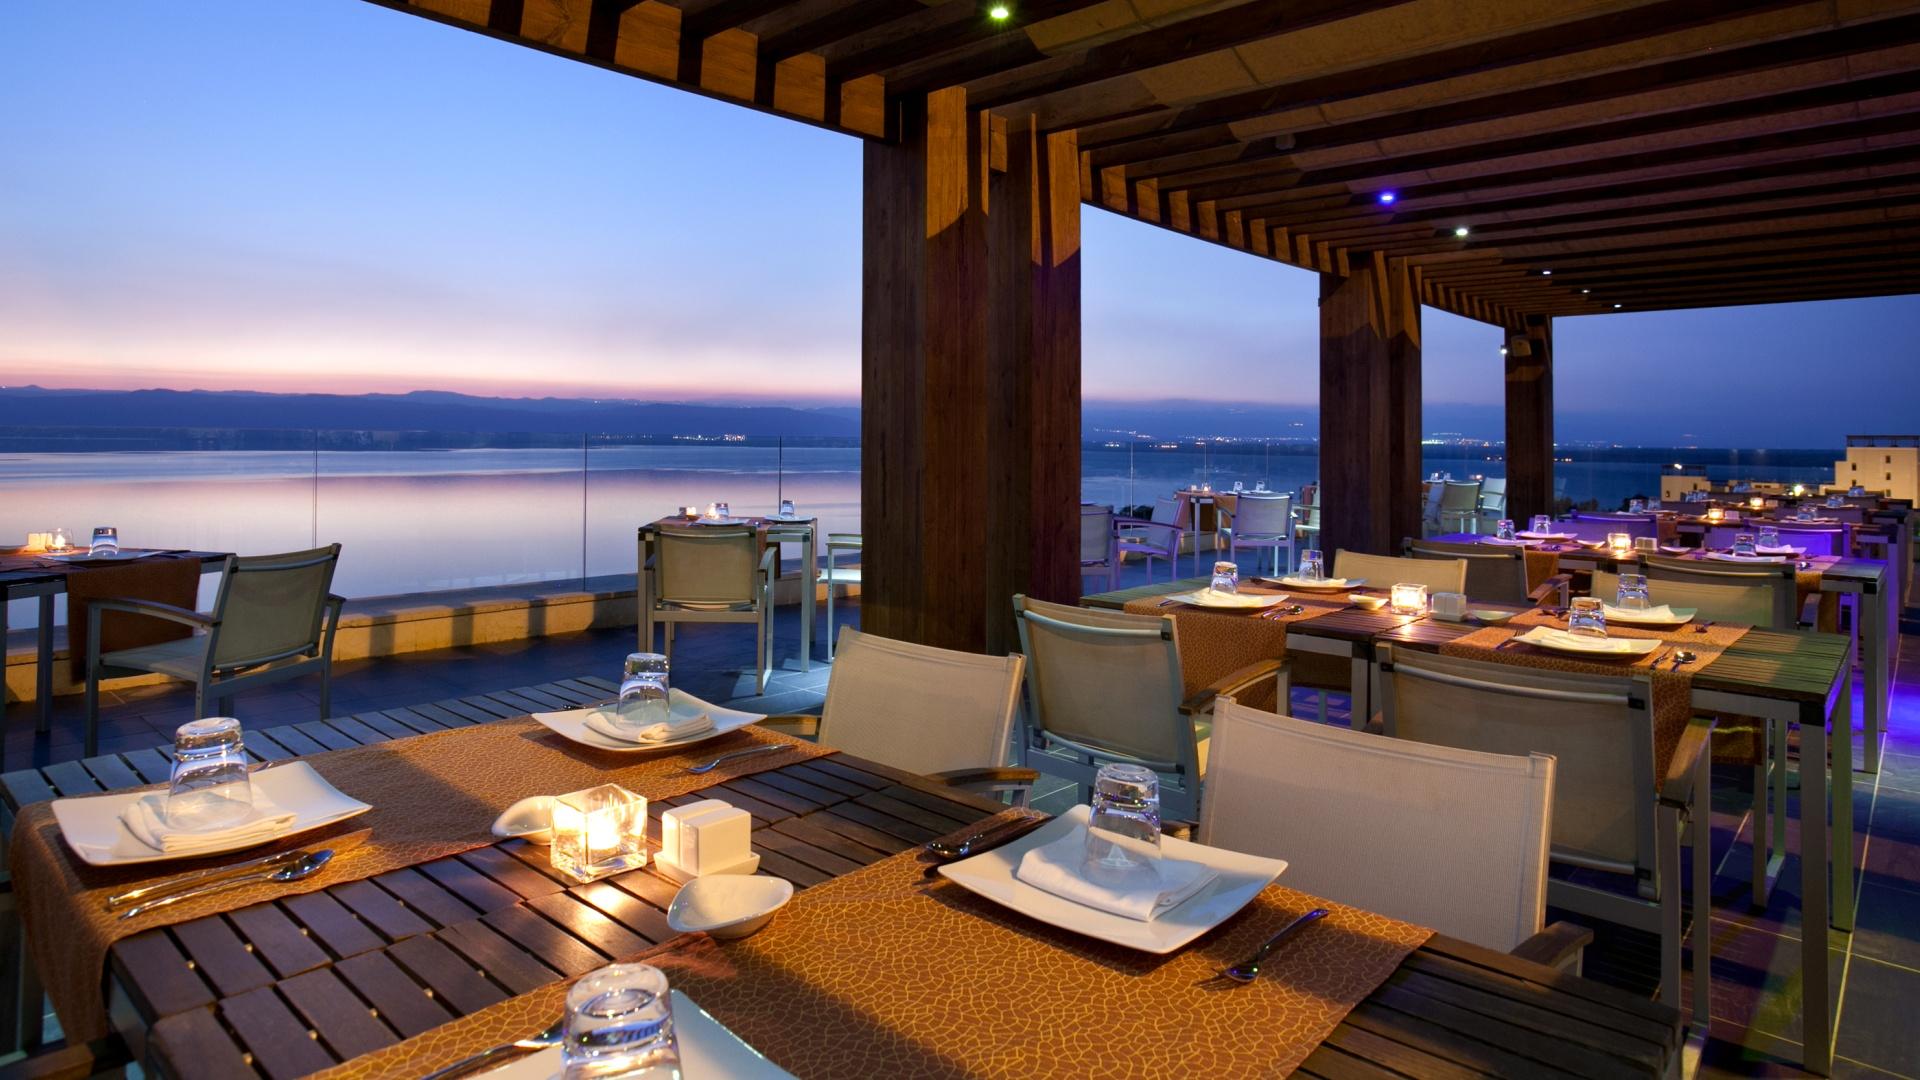 Kempinski Hotel Ishtar Dead Sea open-air dining with views over the Dead Sea